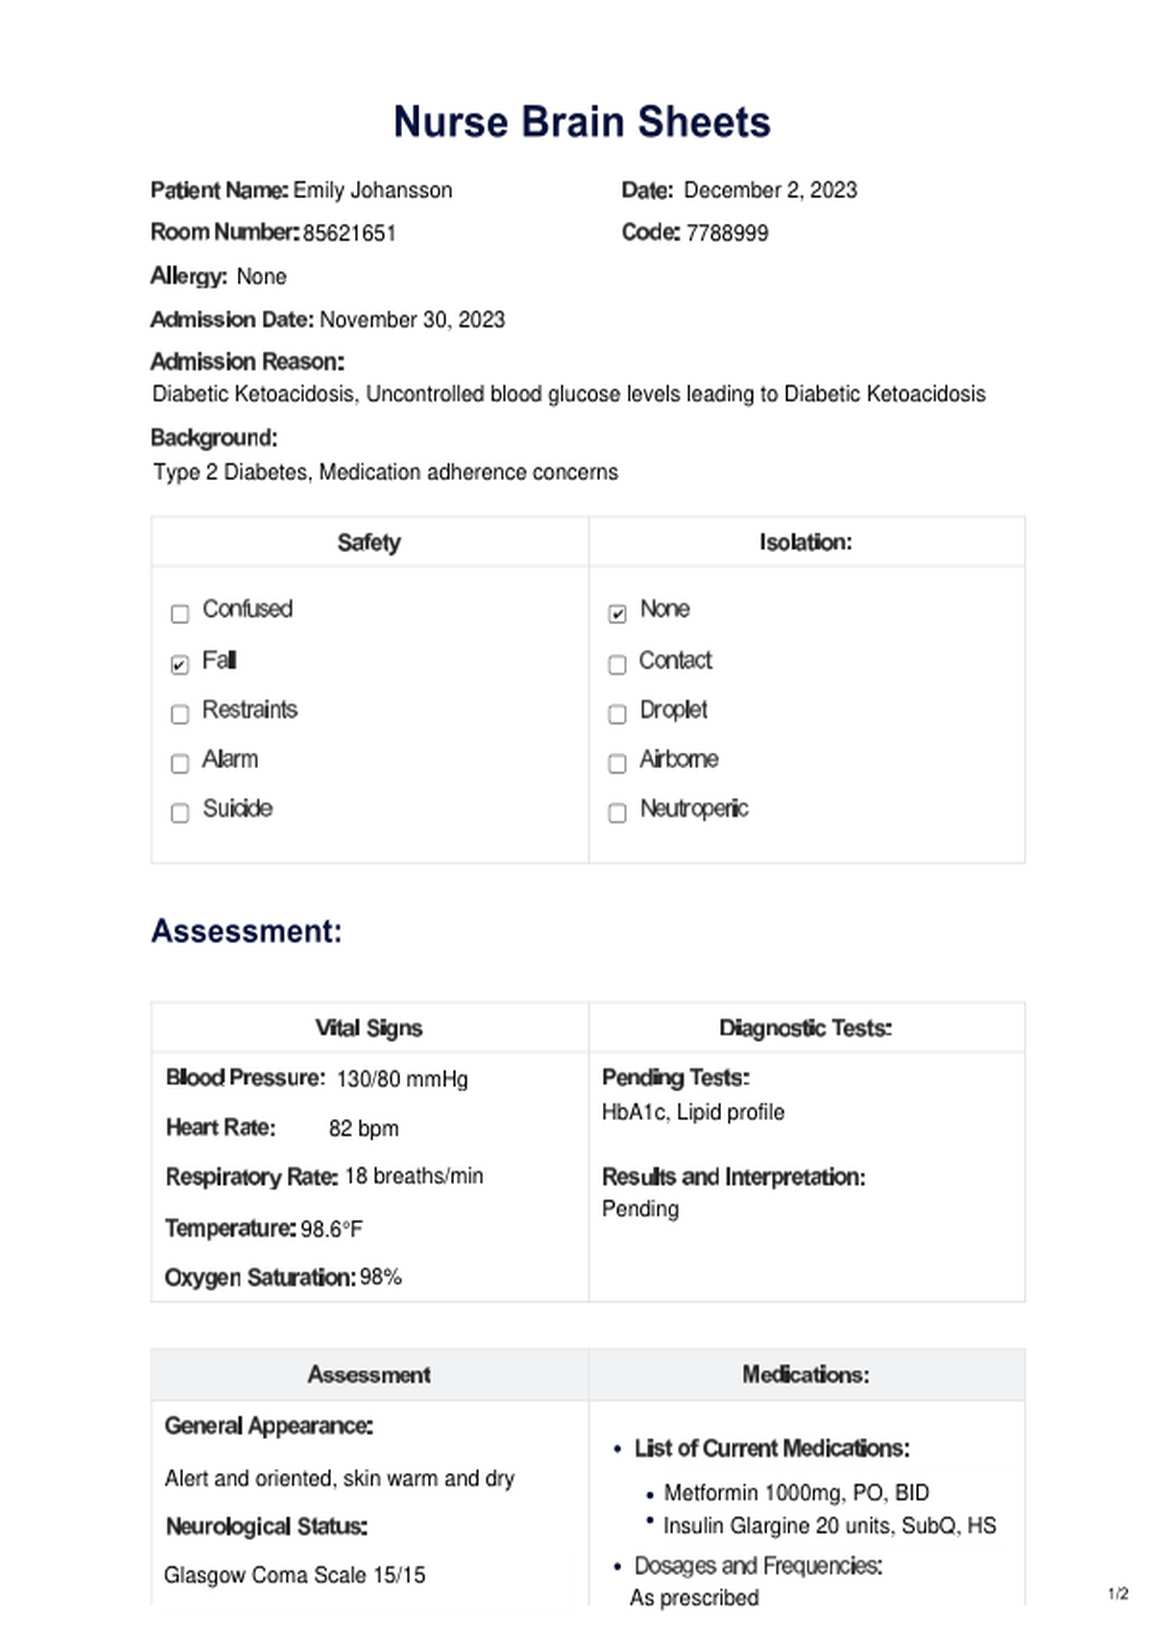 Nurse Brain Sheet PDF Example